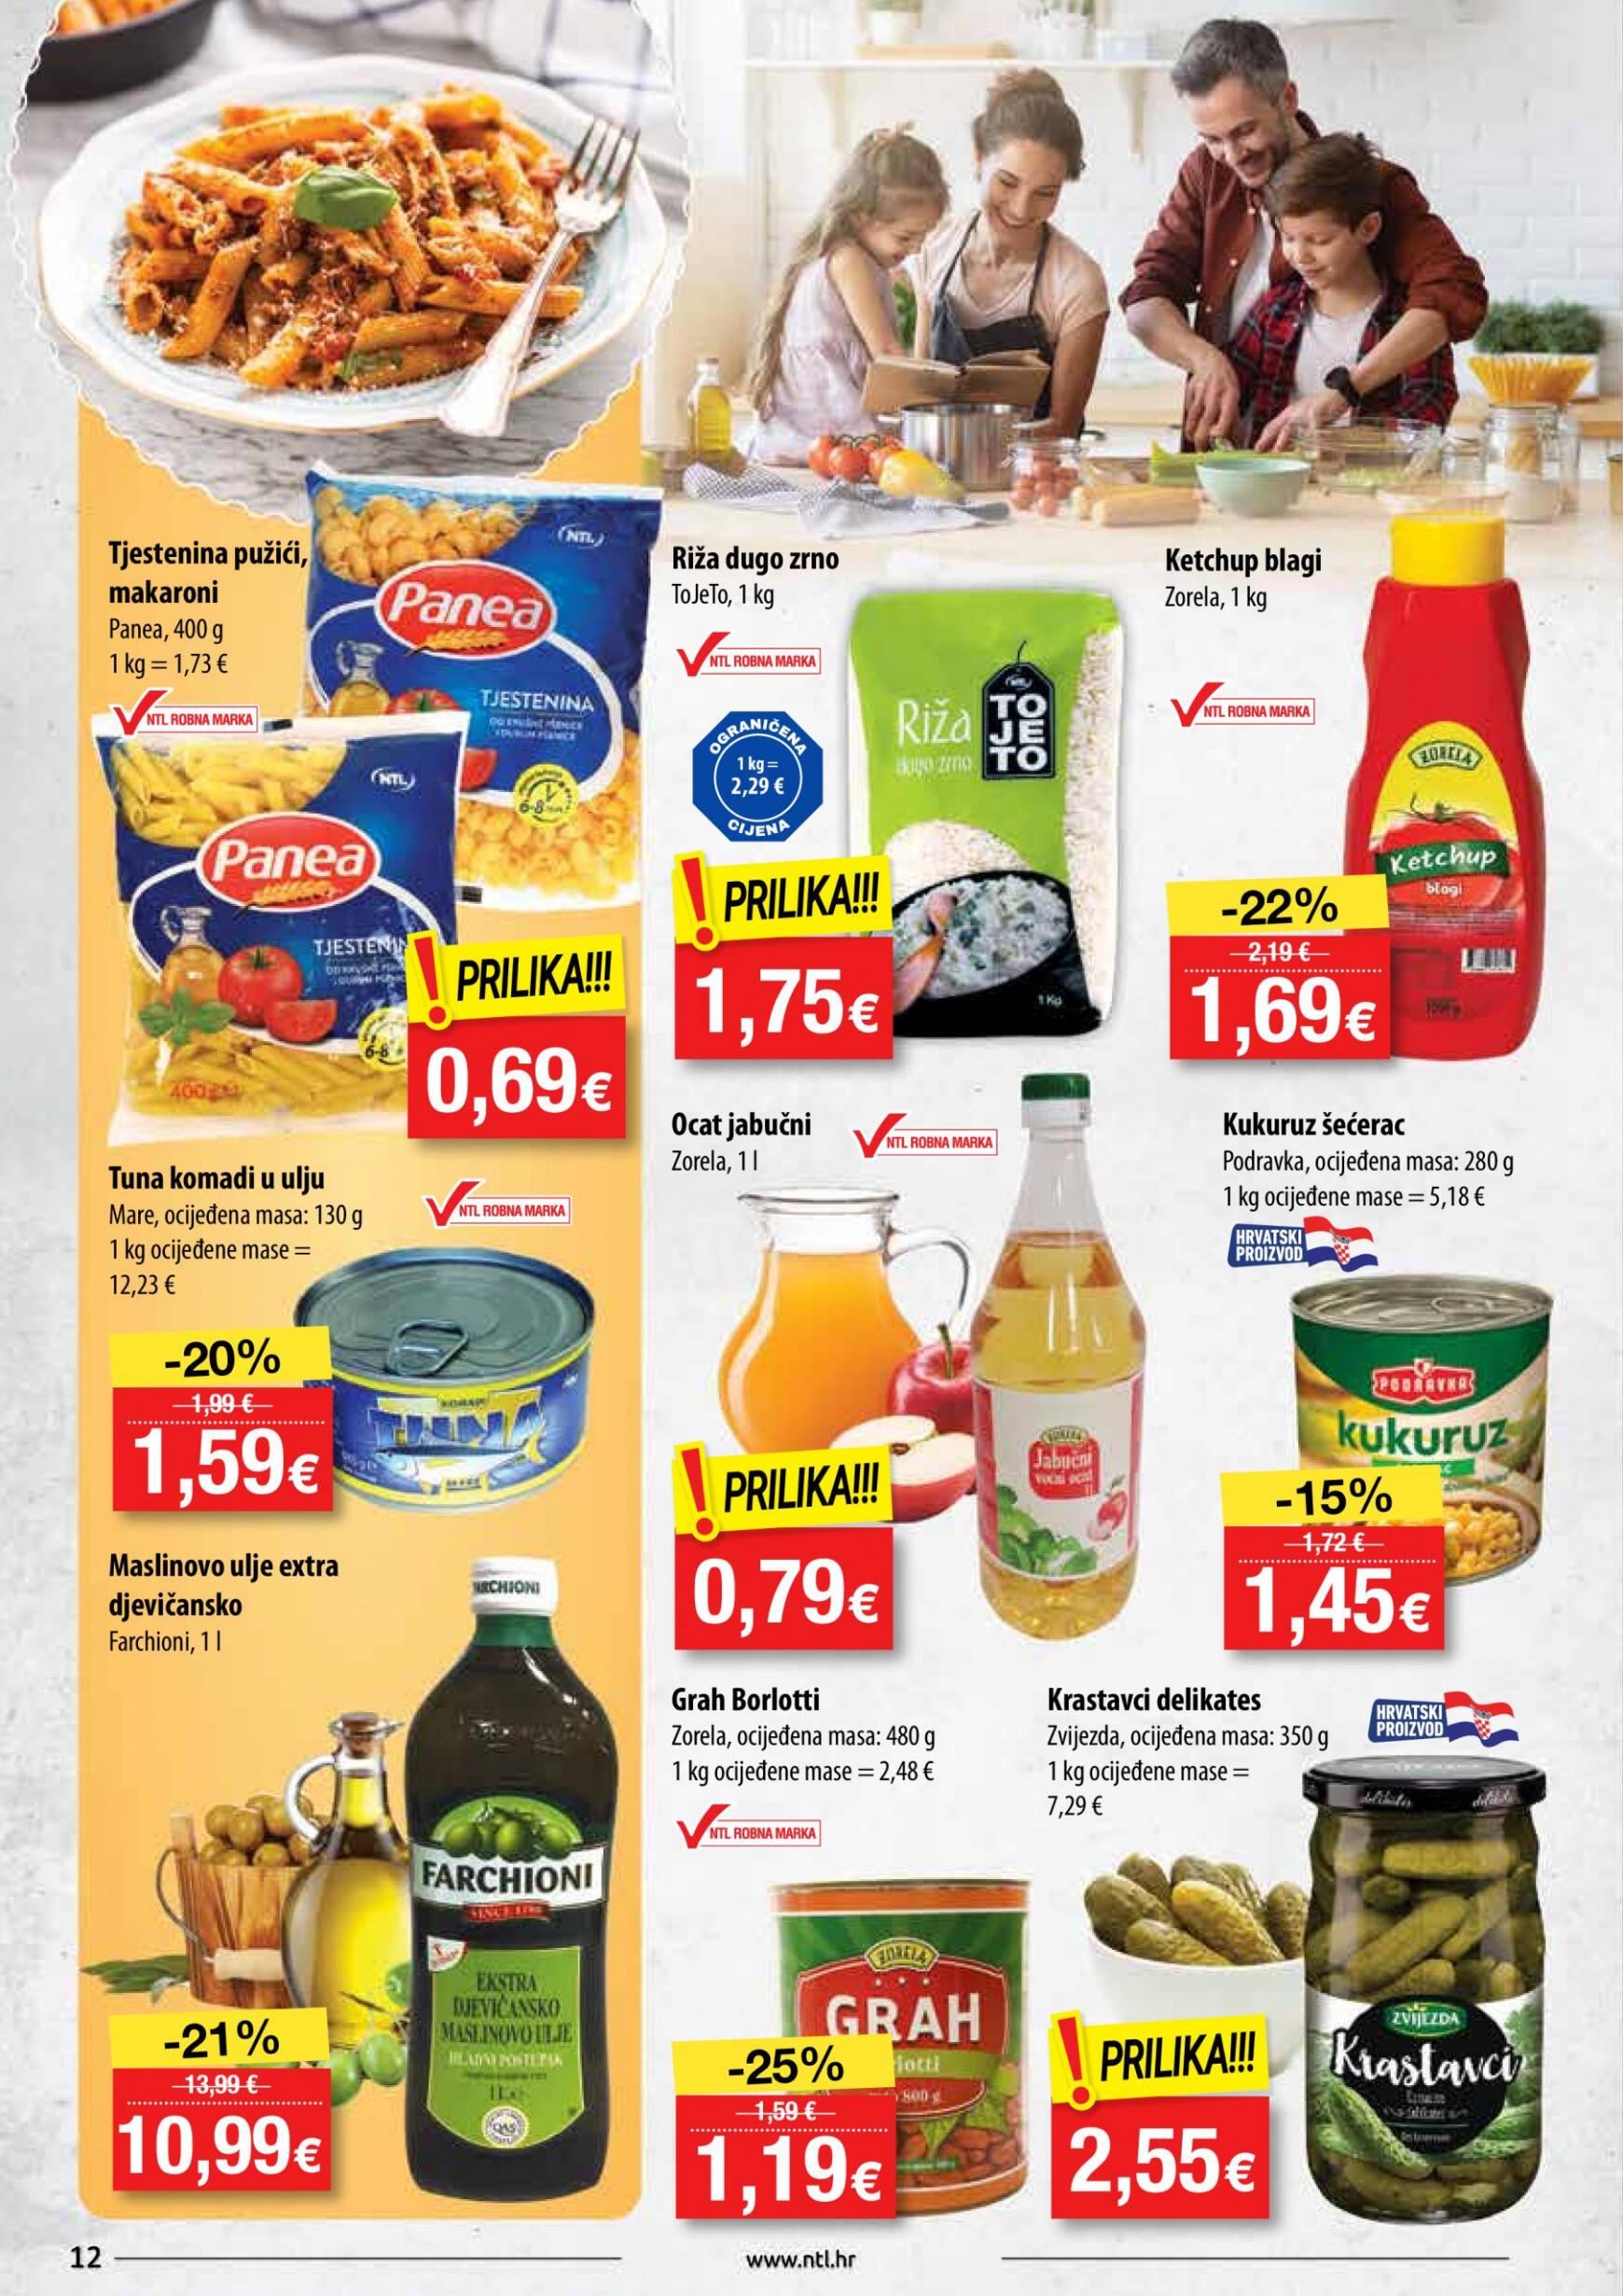 ntl - Novi katalog NTL - Supermarketi Soblinec, Krapina, Duga Resa 10.04. - 16.04. - page: 12